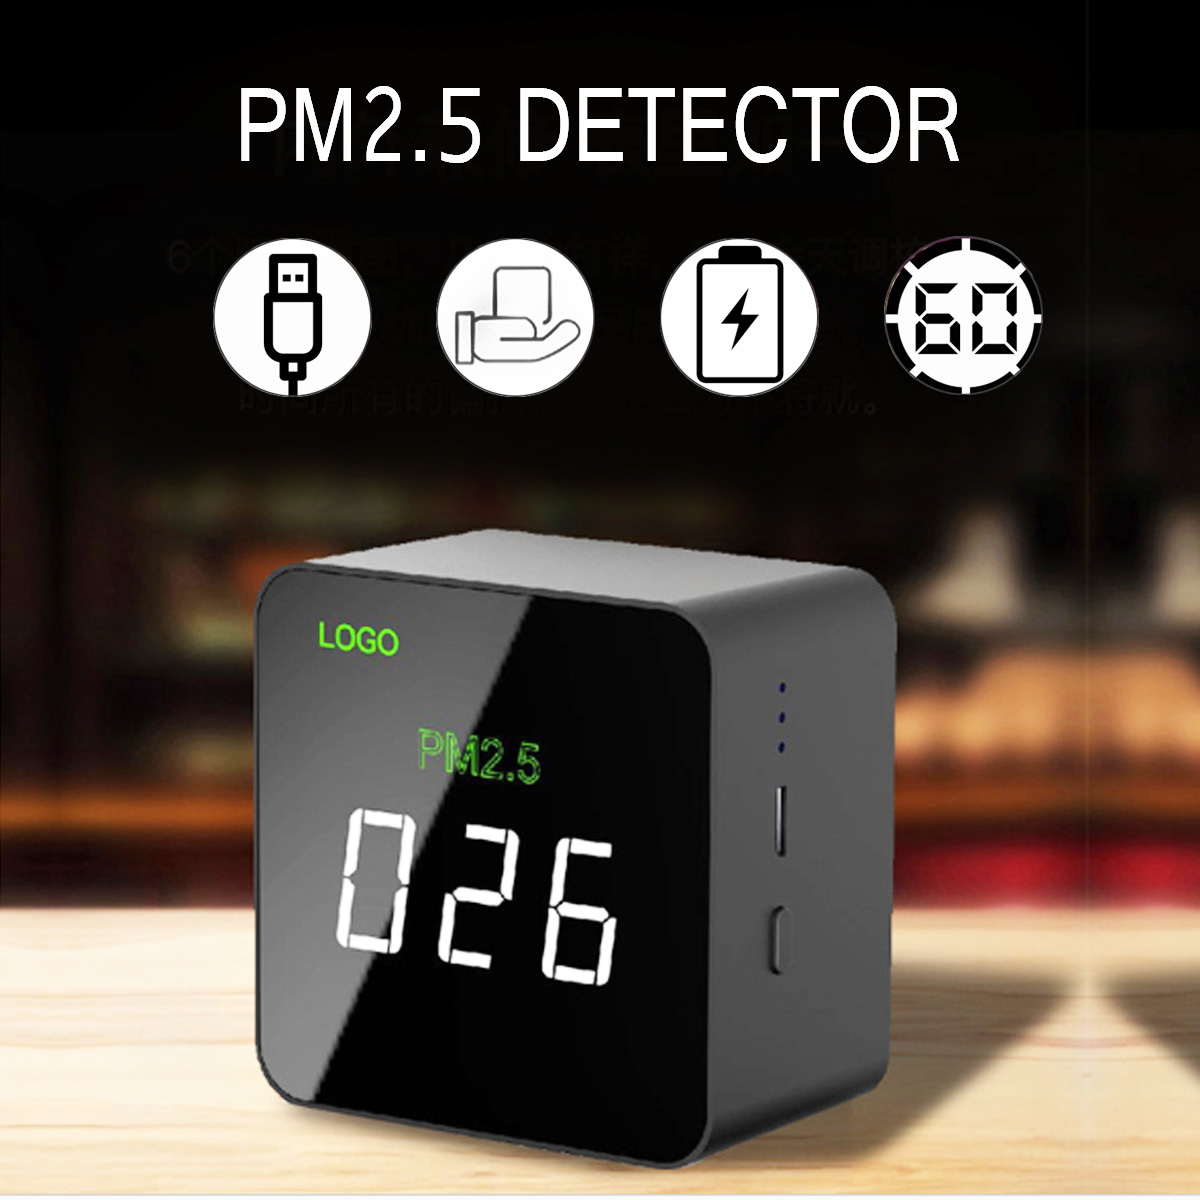 Portable-Digital-PM25-Detector-Air-Quality-Monitor-Meter-Tester-1469906-1